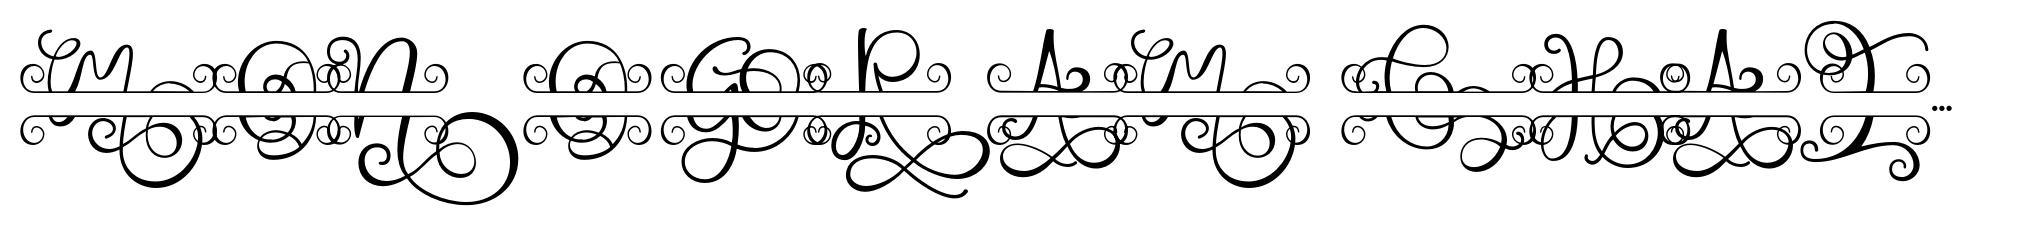 Monogram Challigraphy Brackets 13 image